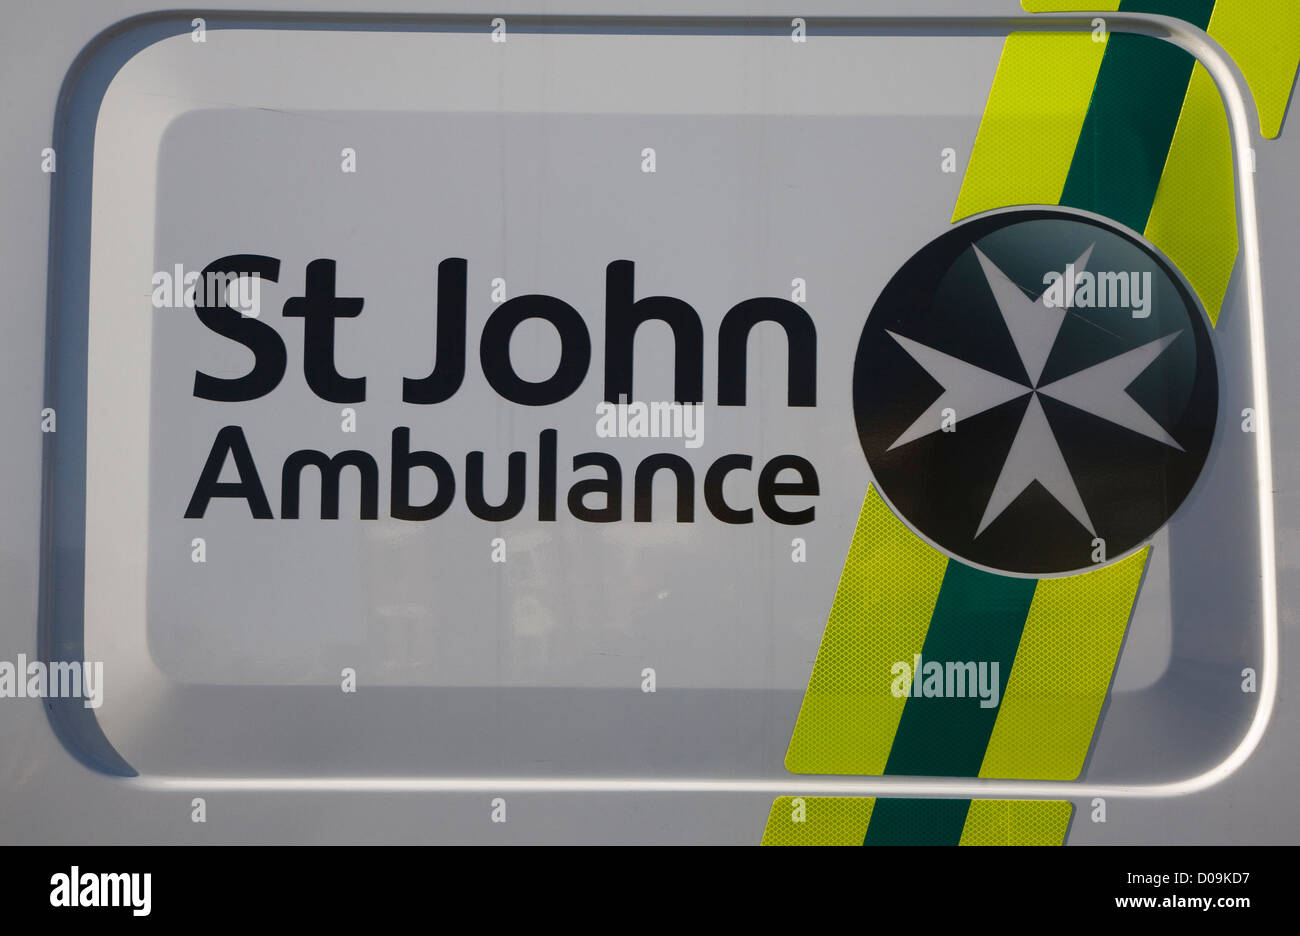 St John Ambulance vehicle sign Stock Photo